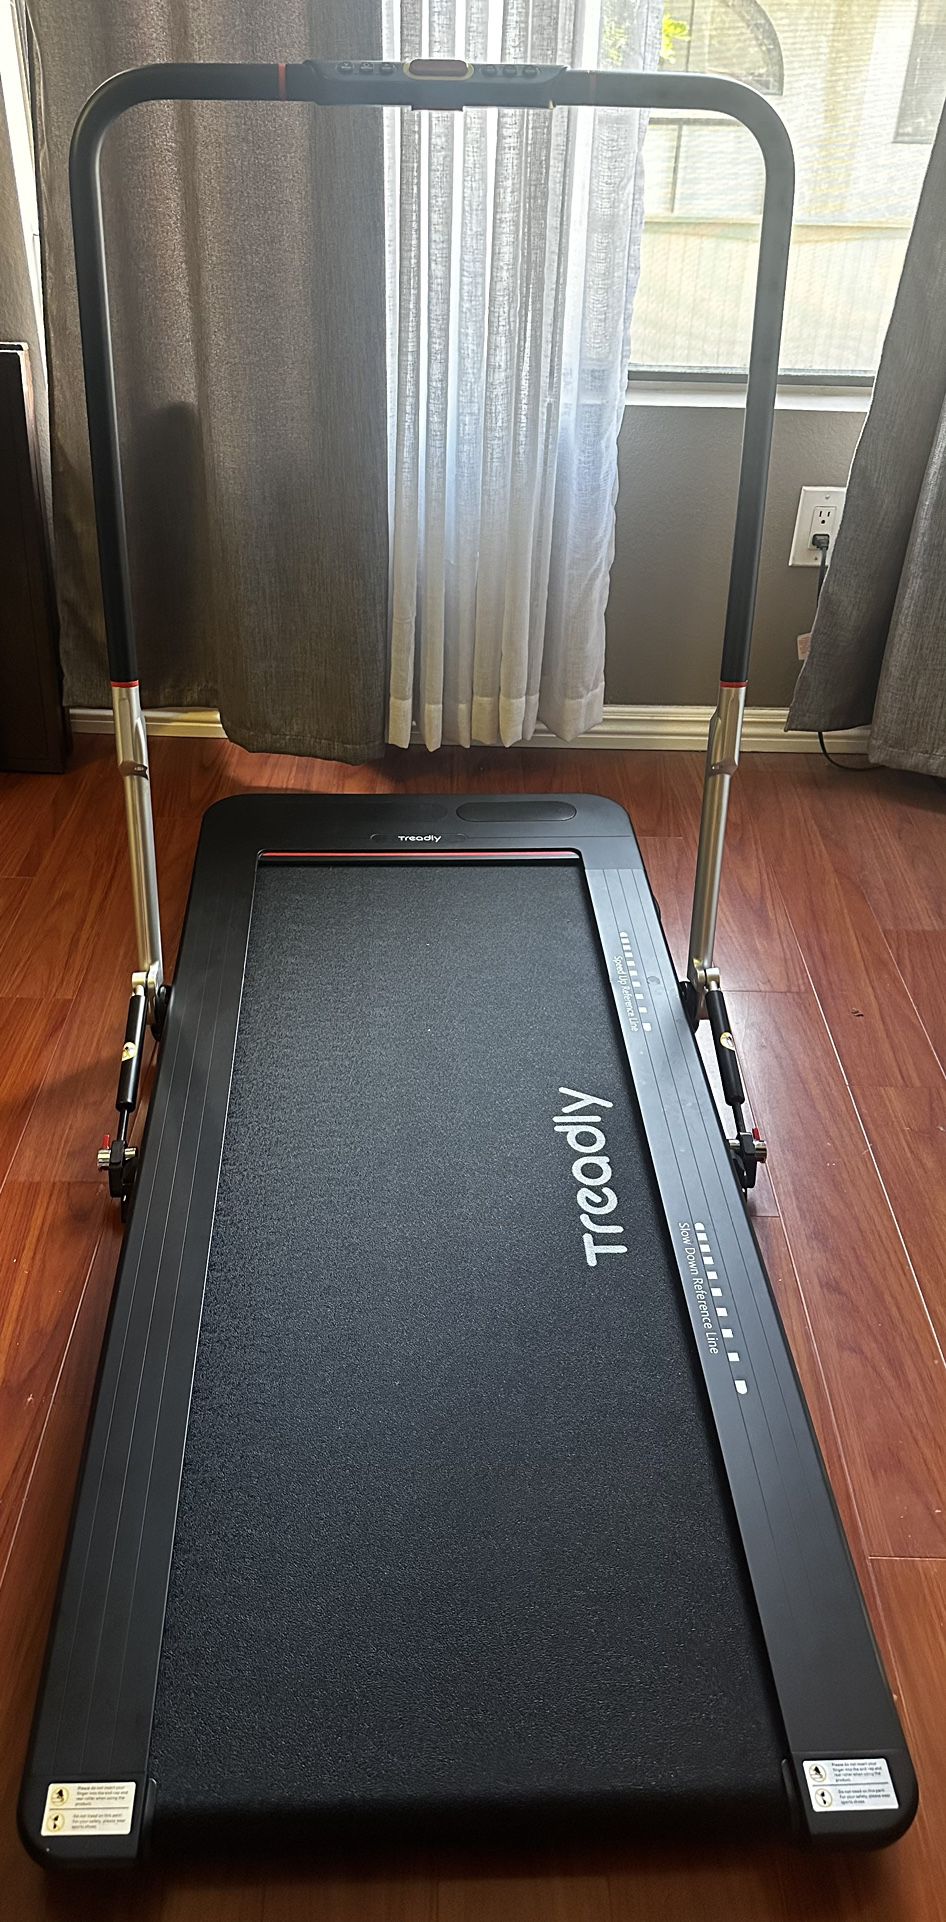 Treadly Slim Treadmill - $200